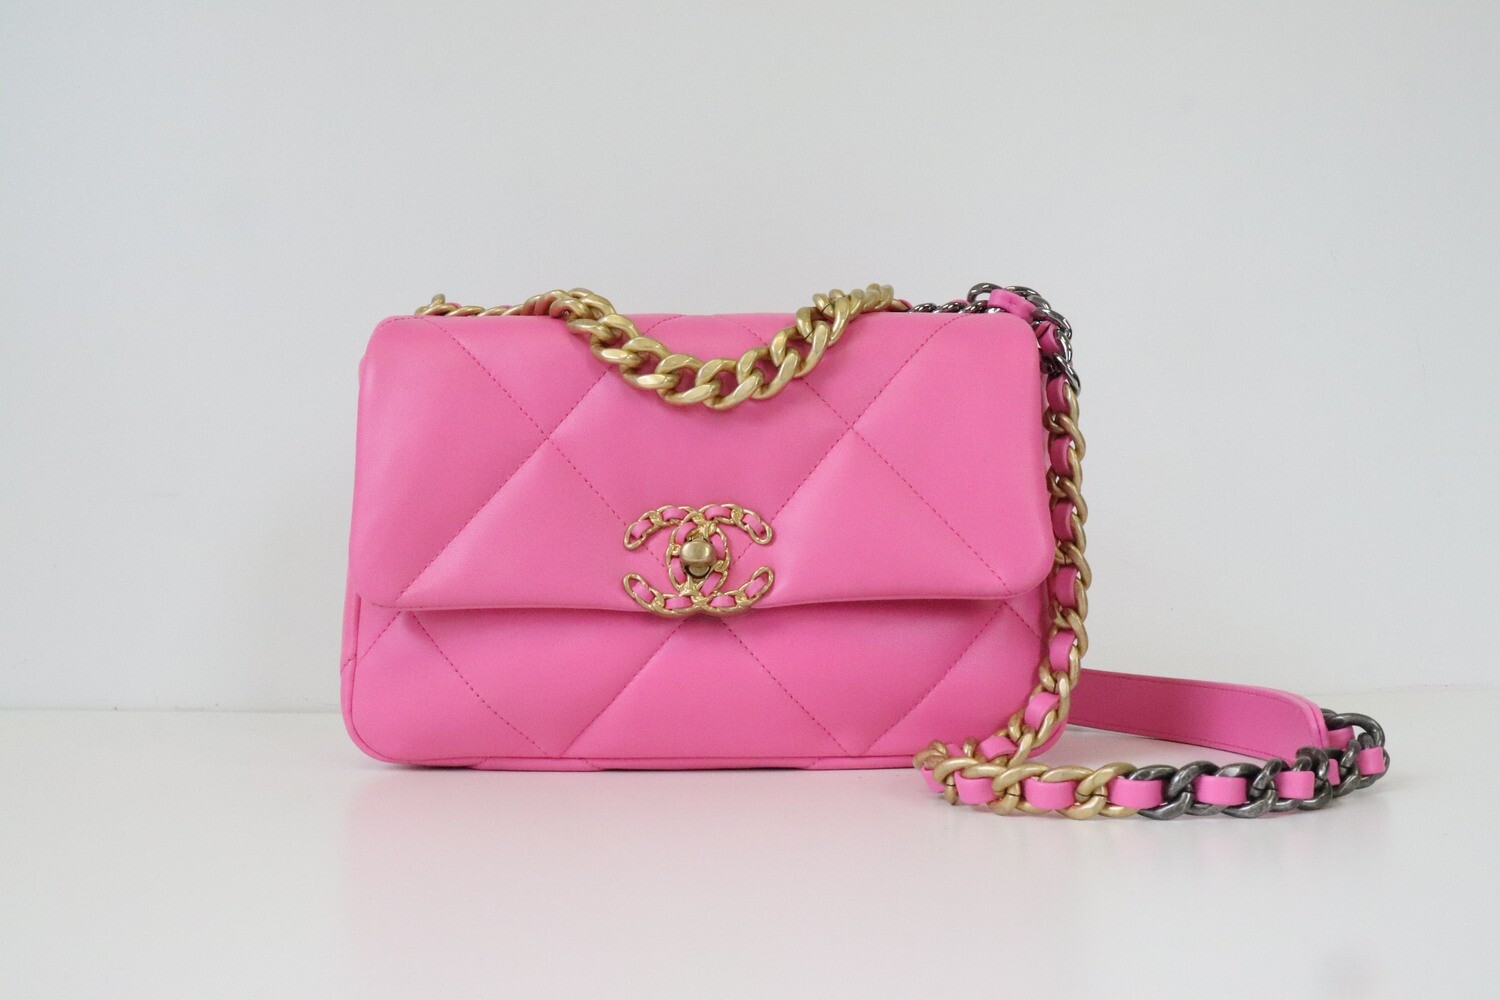 Chanel 19 Medium (Small) Hot Neon Pink, Like New in Box - Julia Rose Boston